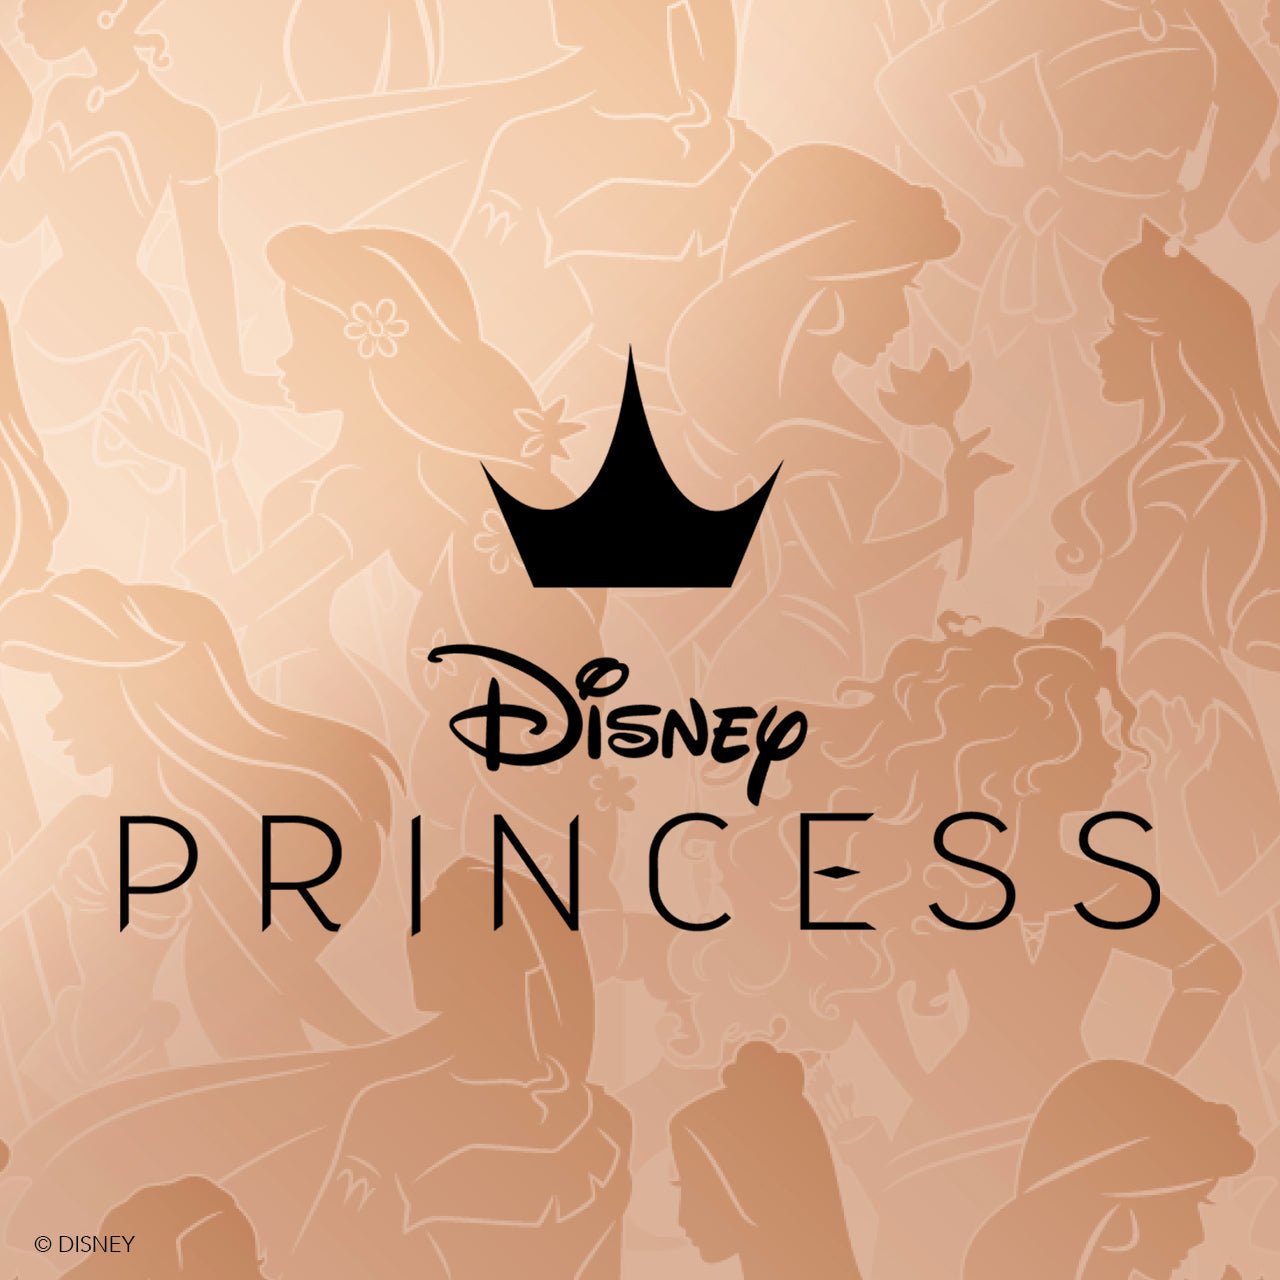 Kitsch & Disney Σατέν μάσκα ματιών - Princess Party